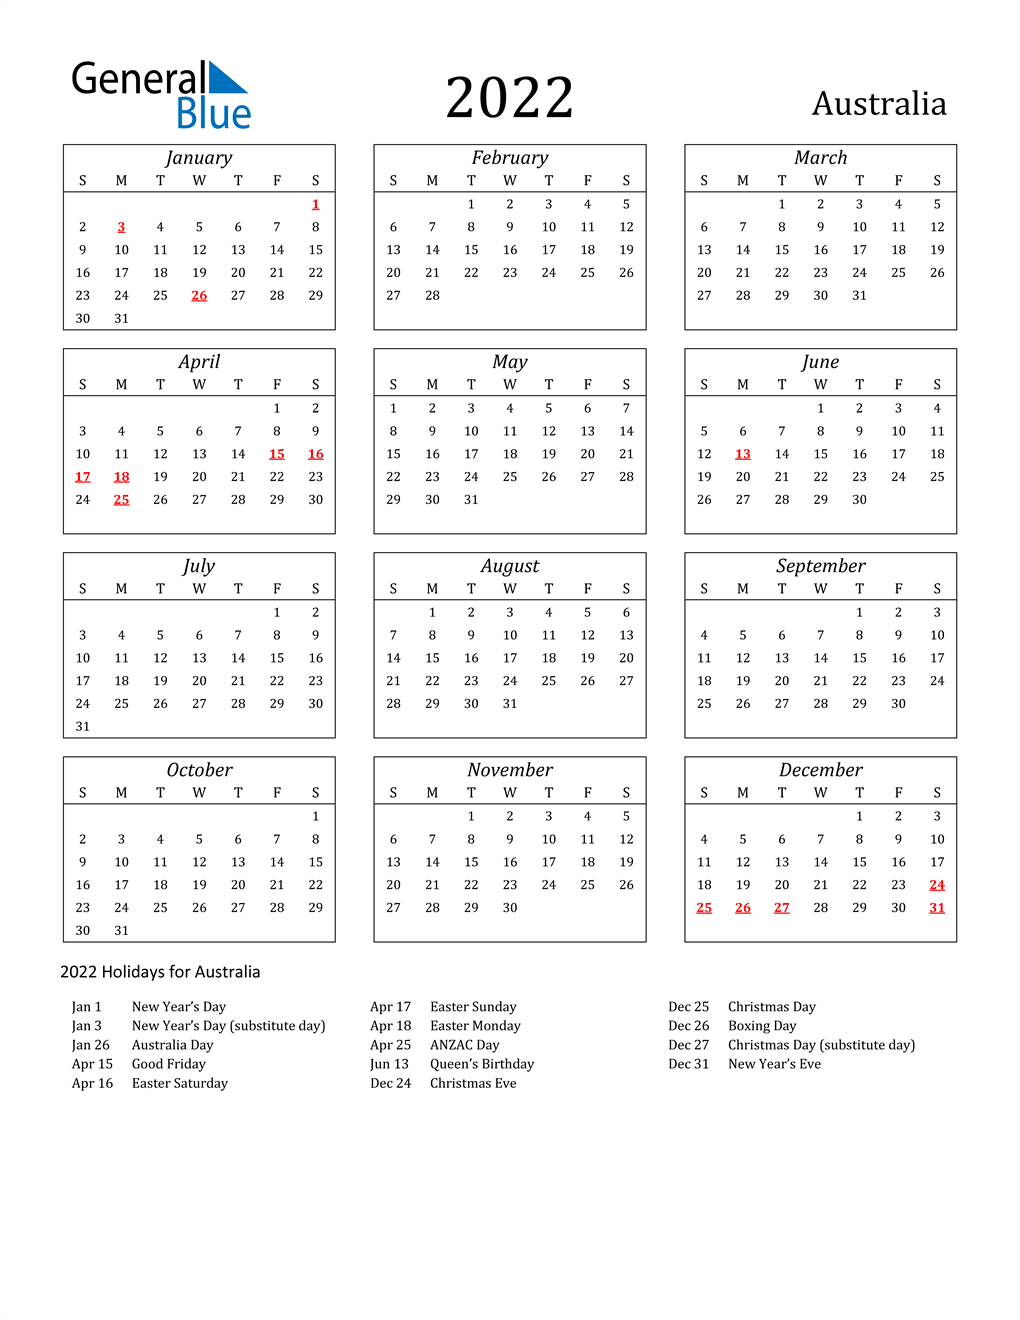 Stat Holiday Calendar 2022